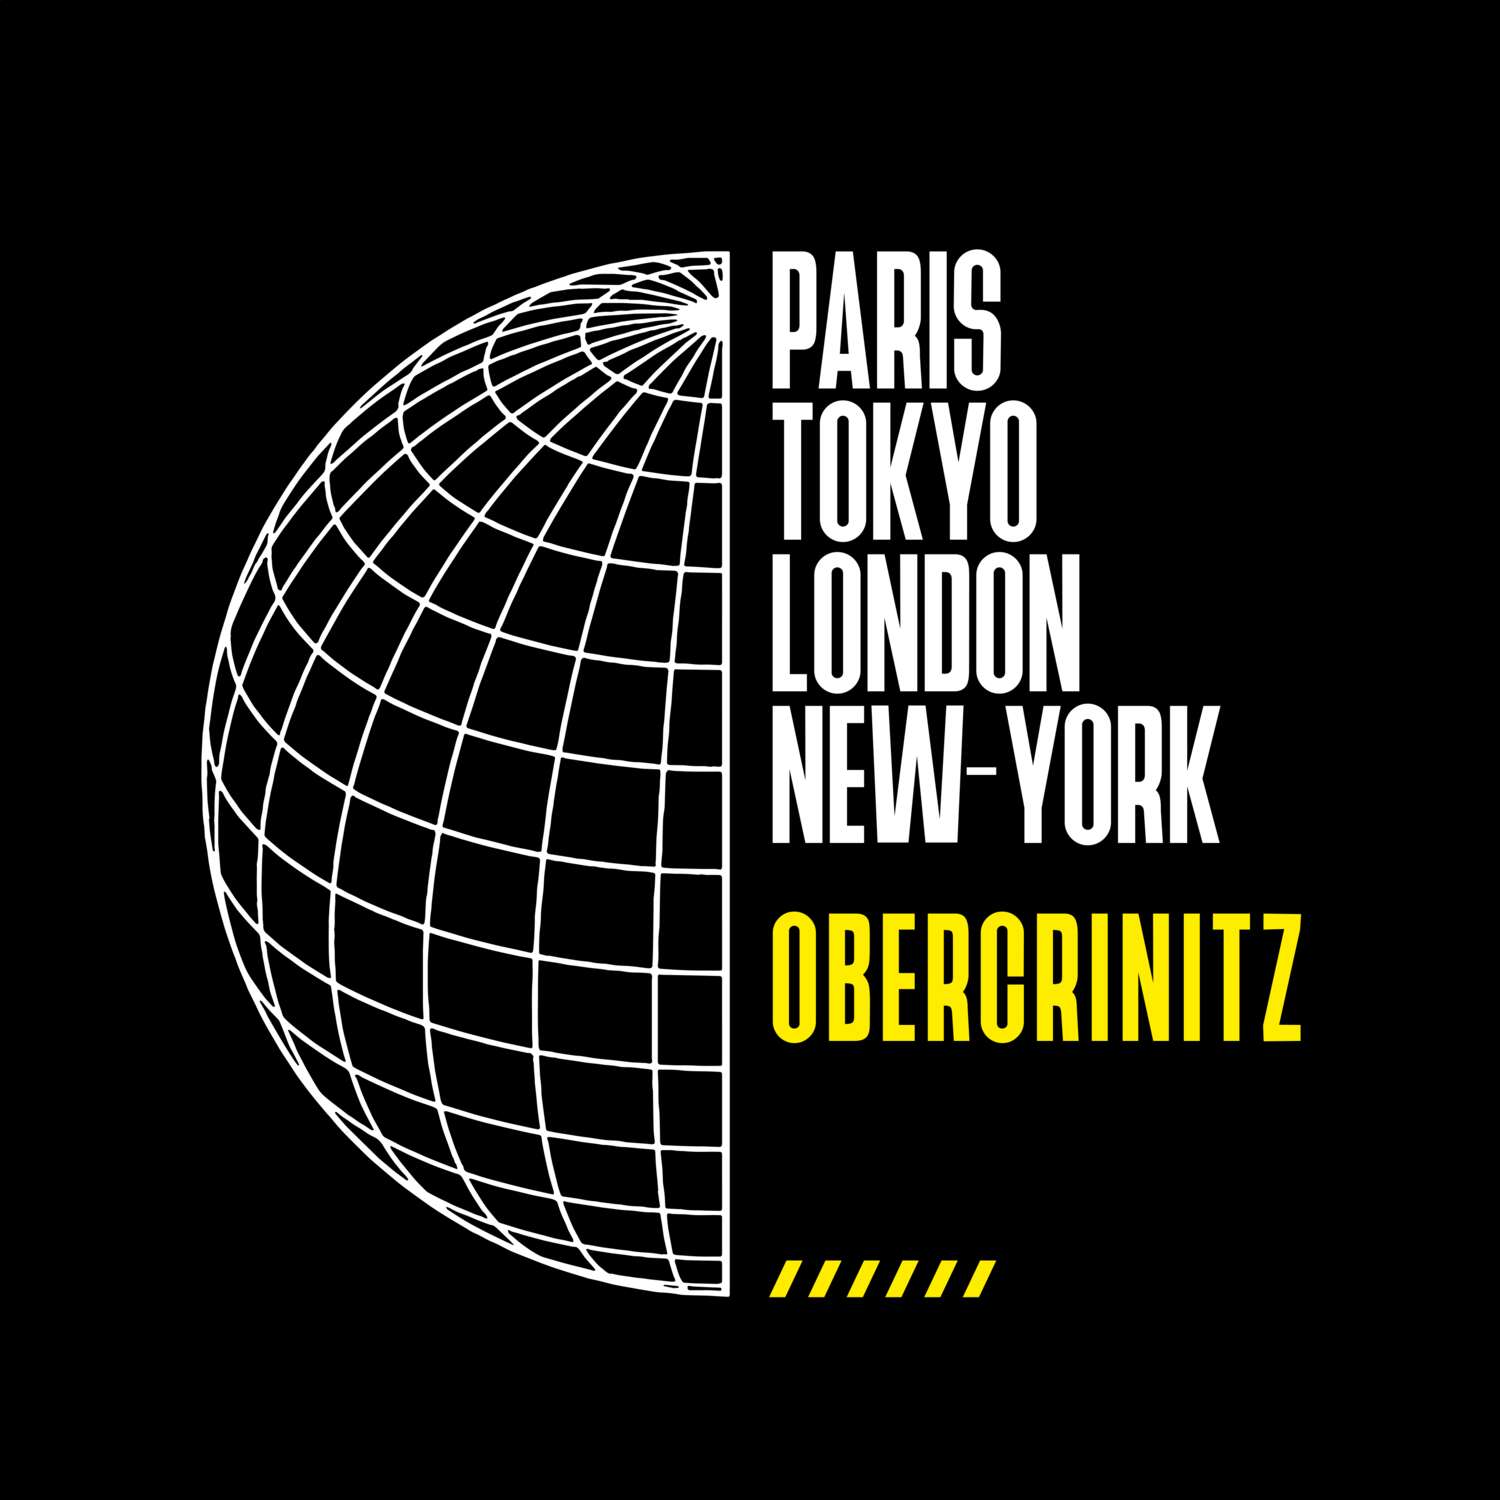 Obercrinitz T-Shirt »Paris Tokyo London«